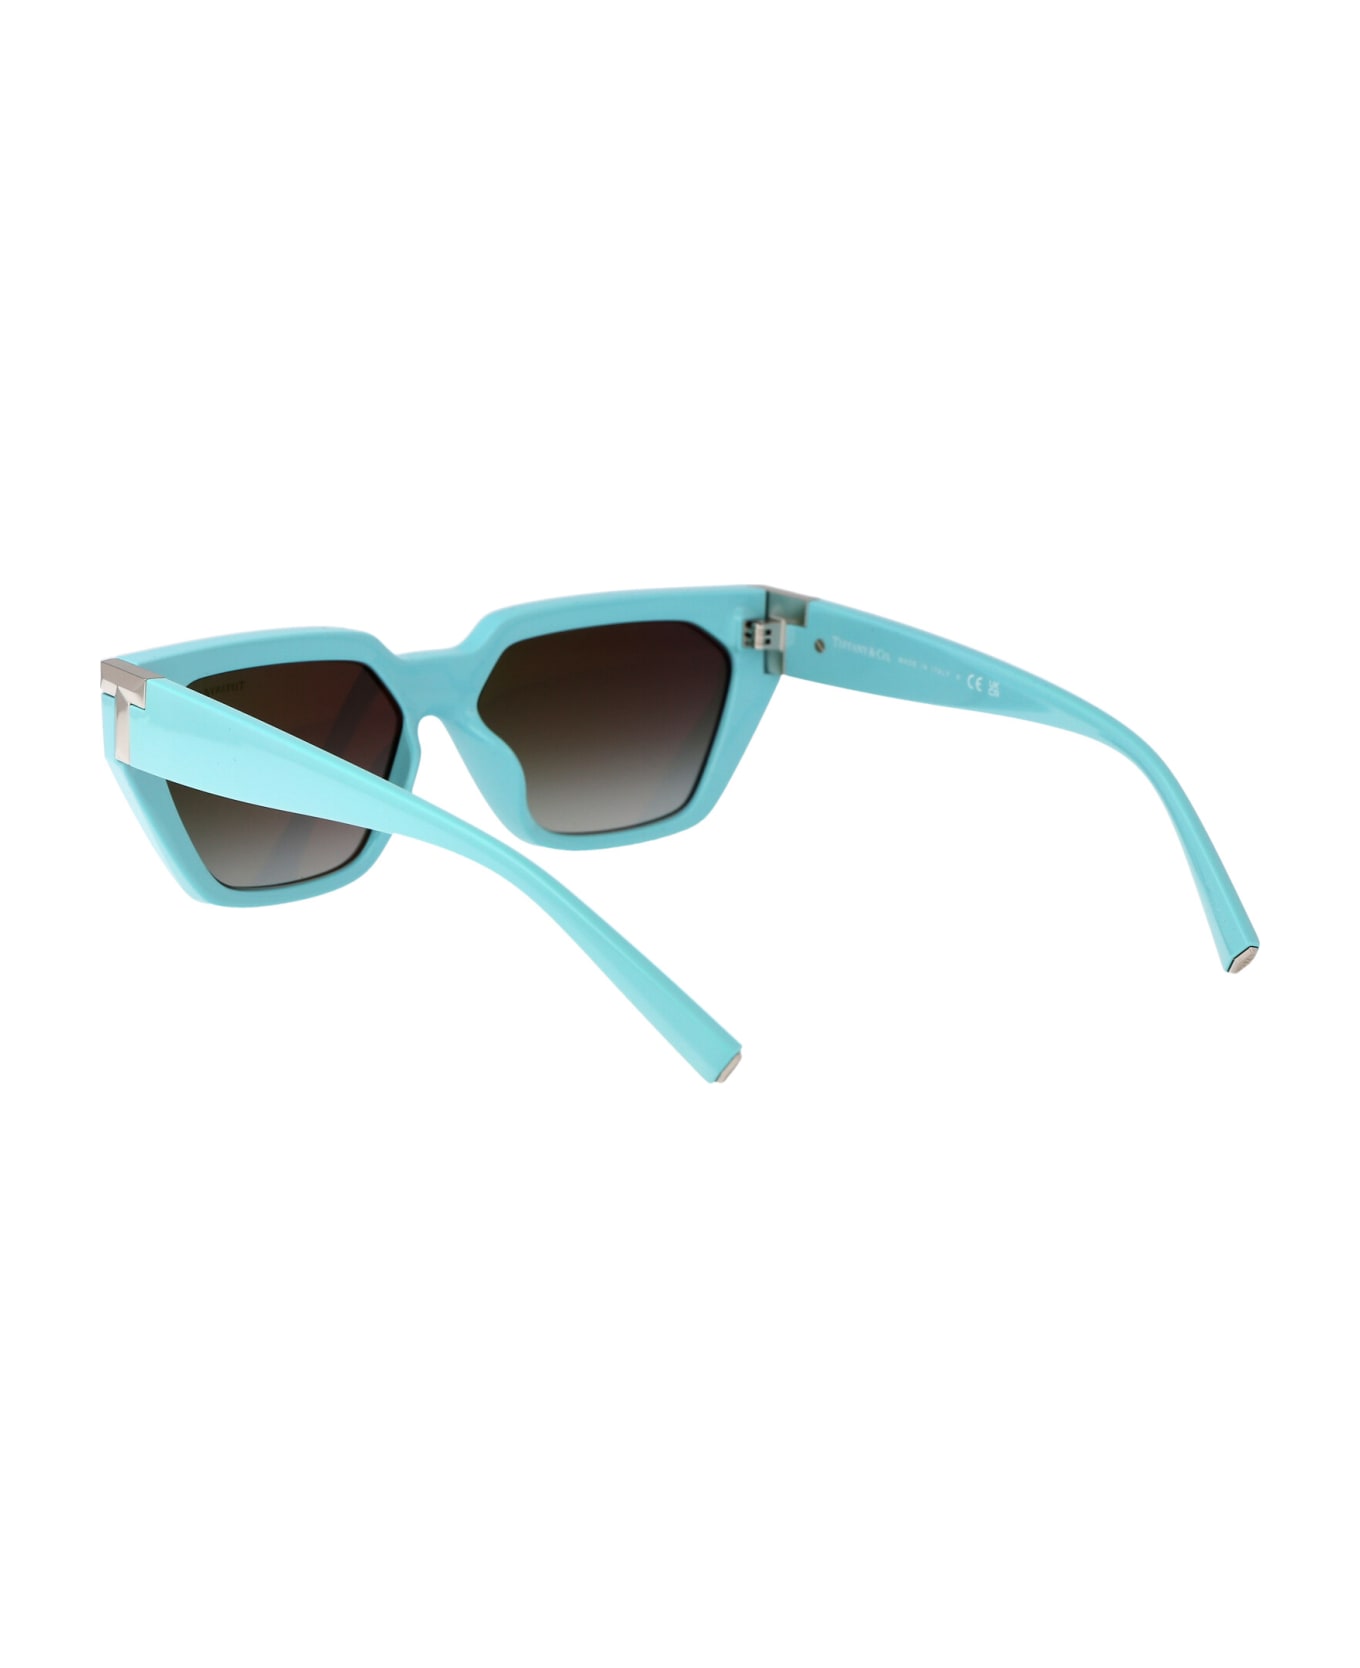 Tiffany & Co. 0tf4205u Sunglasses - 83883C Tiffany Blue